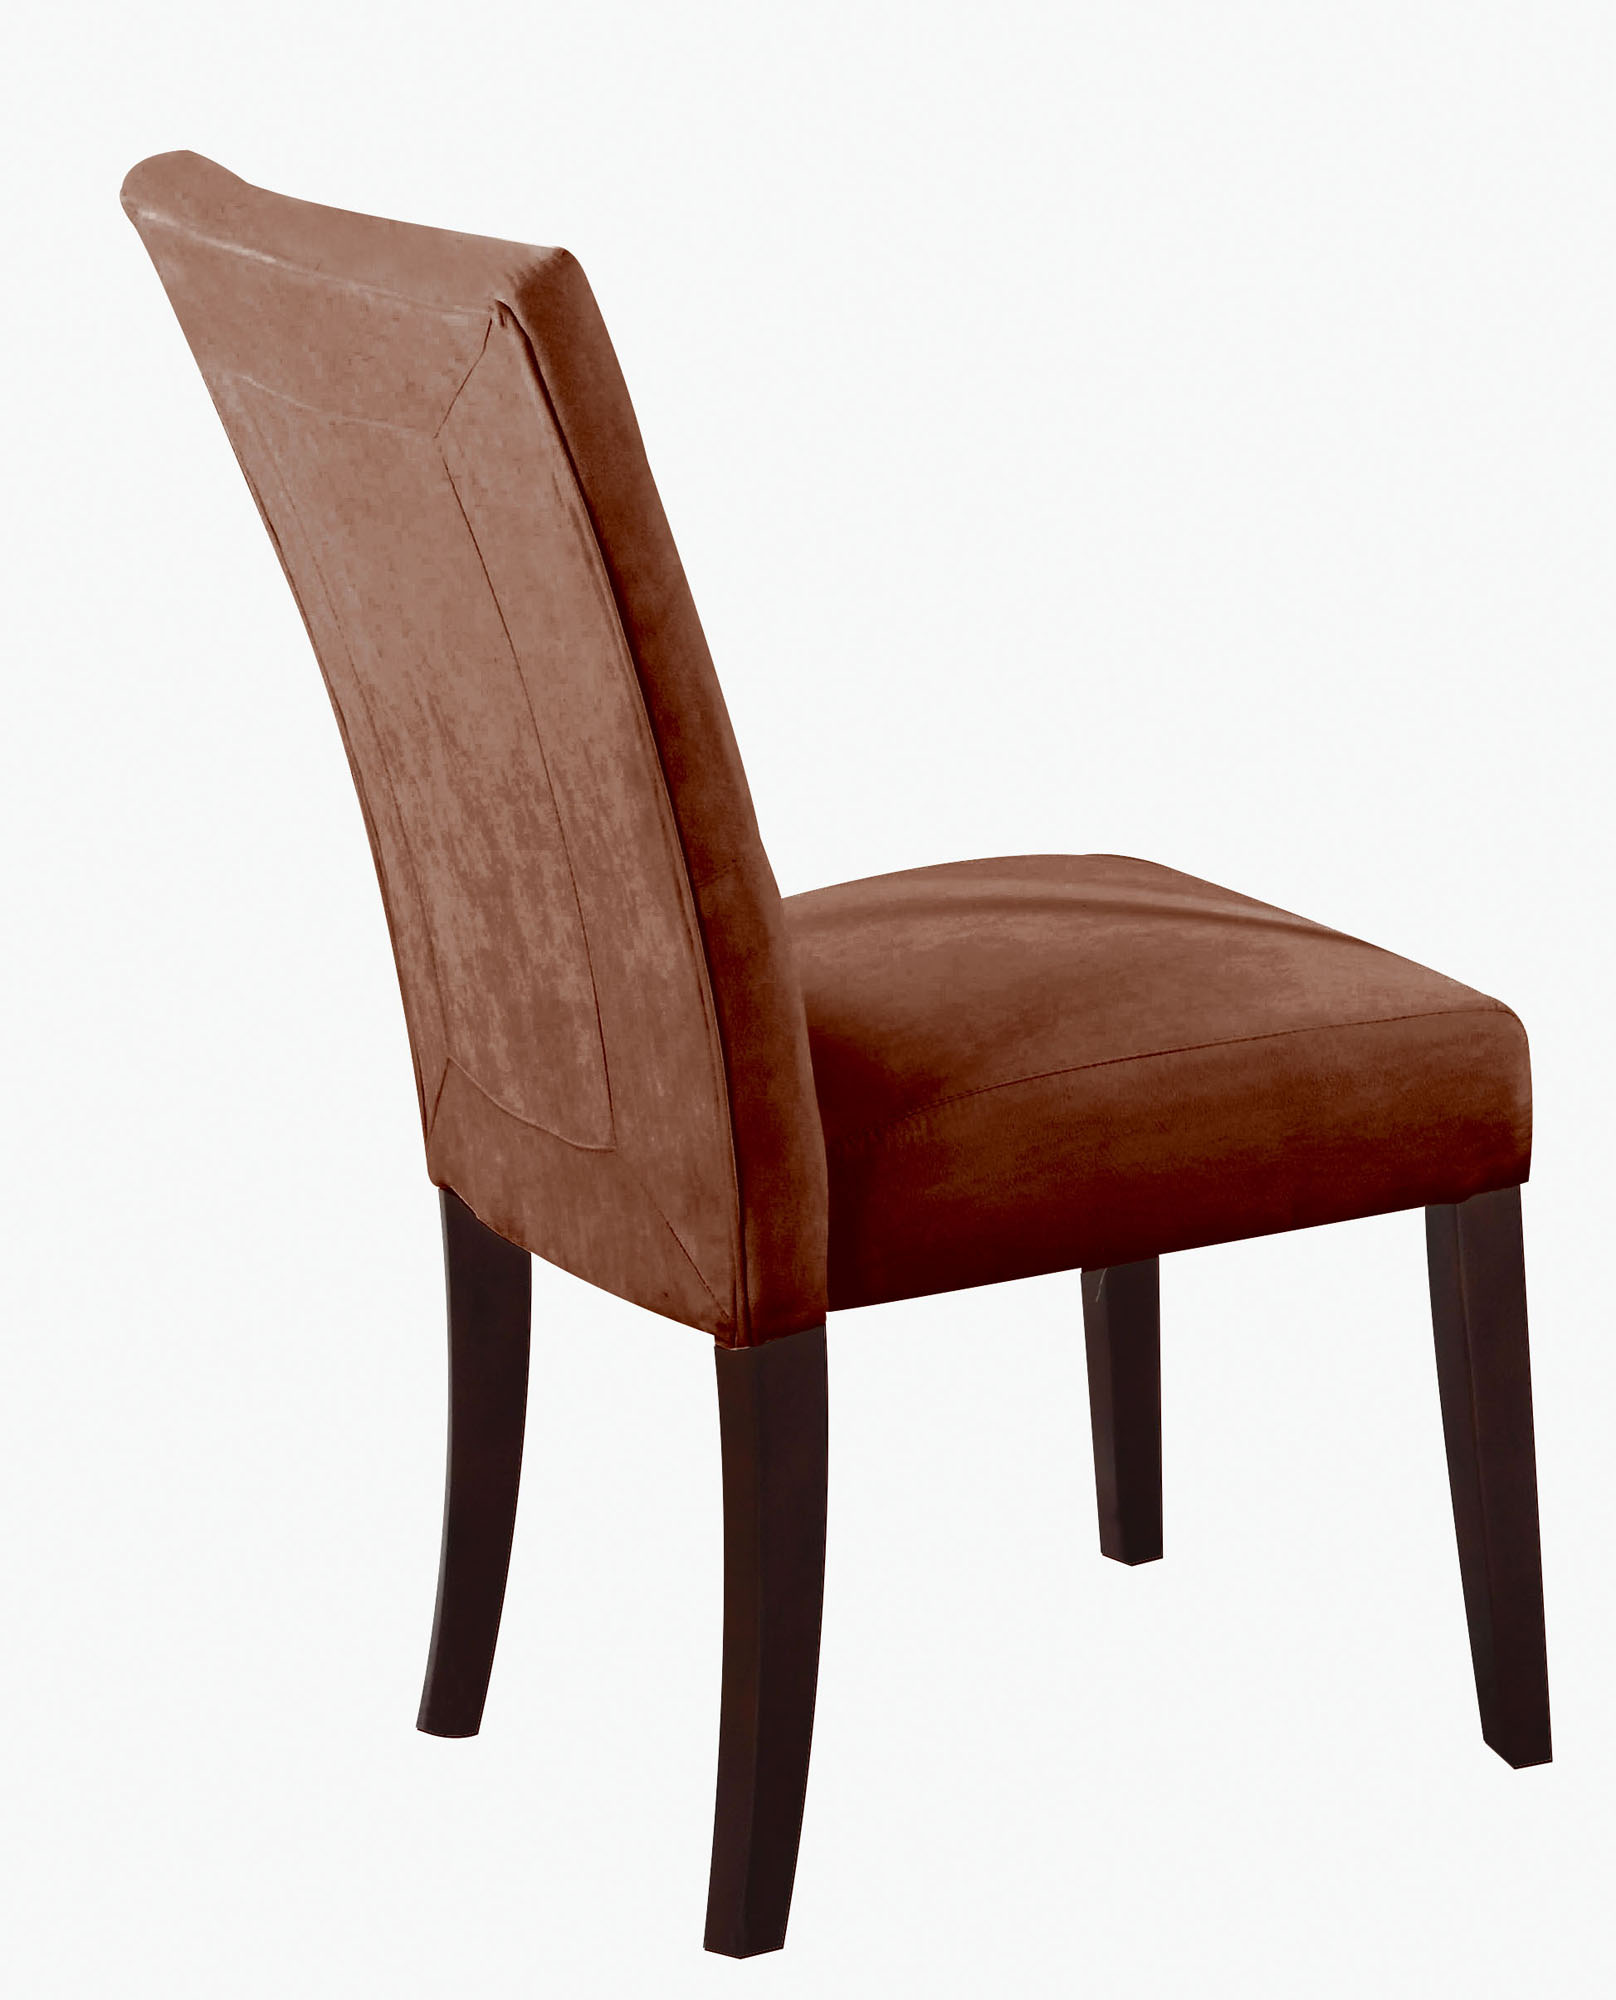 19" X 25" X 40" 2pc Chocolate Microfiber And Walnut Side Chair